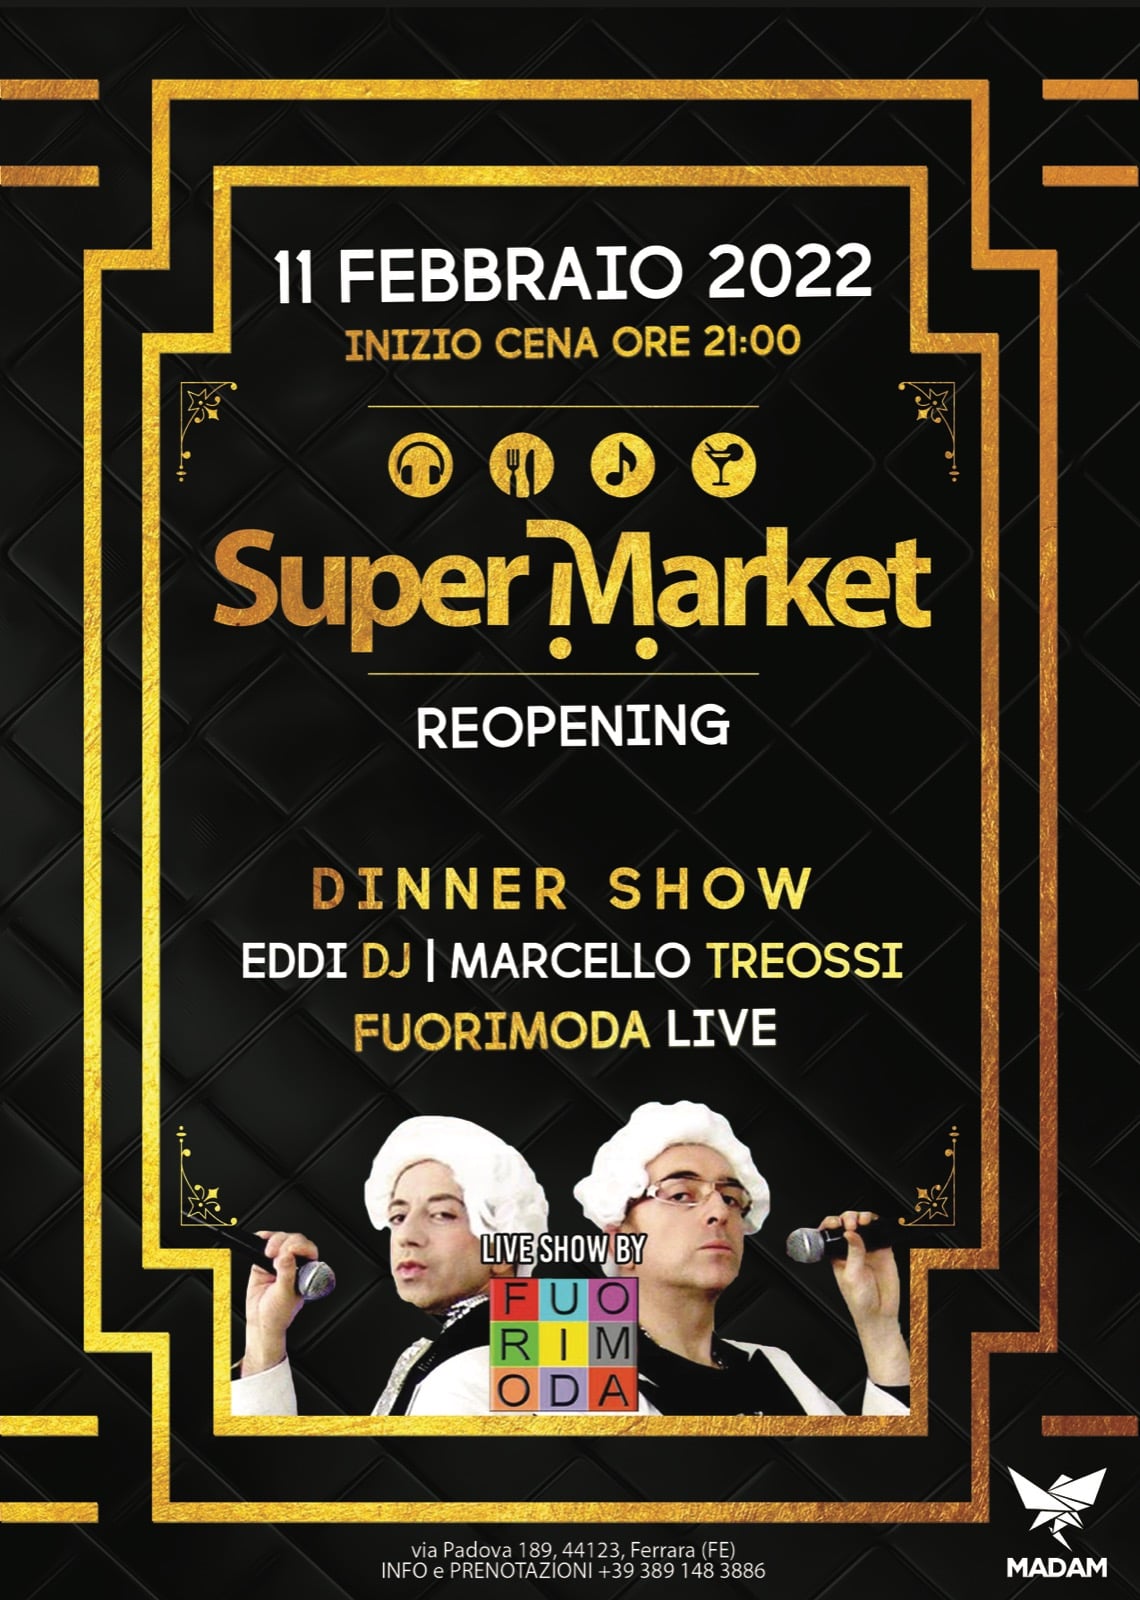 Grande riapertura SuperMarket venerdì 11 febbraio 2022